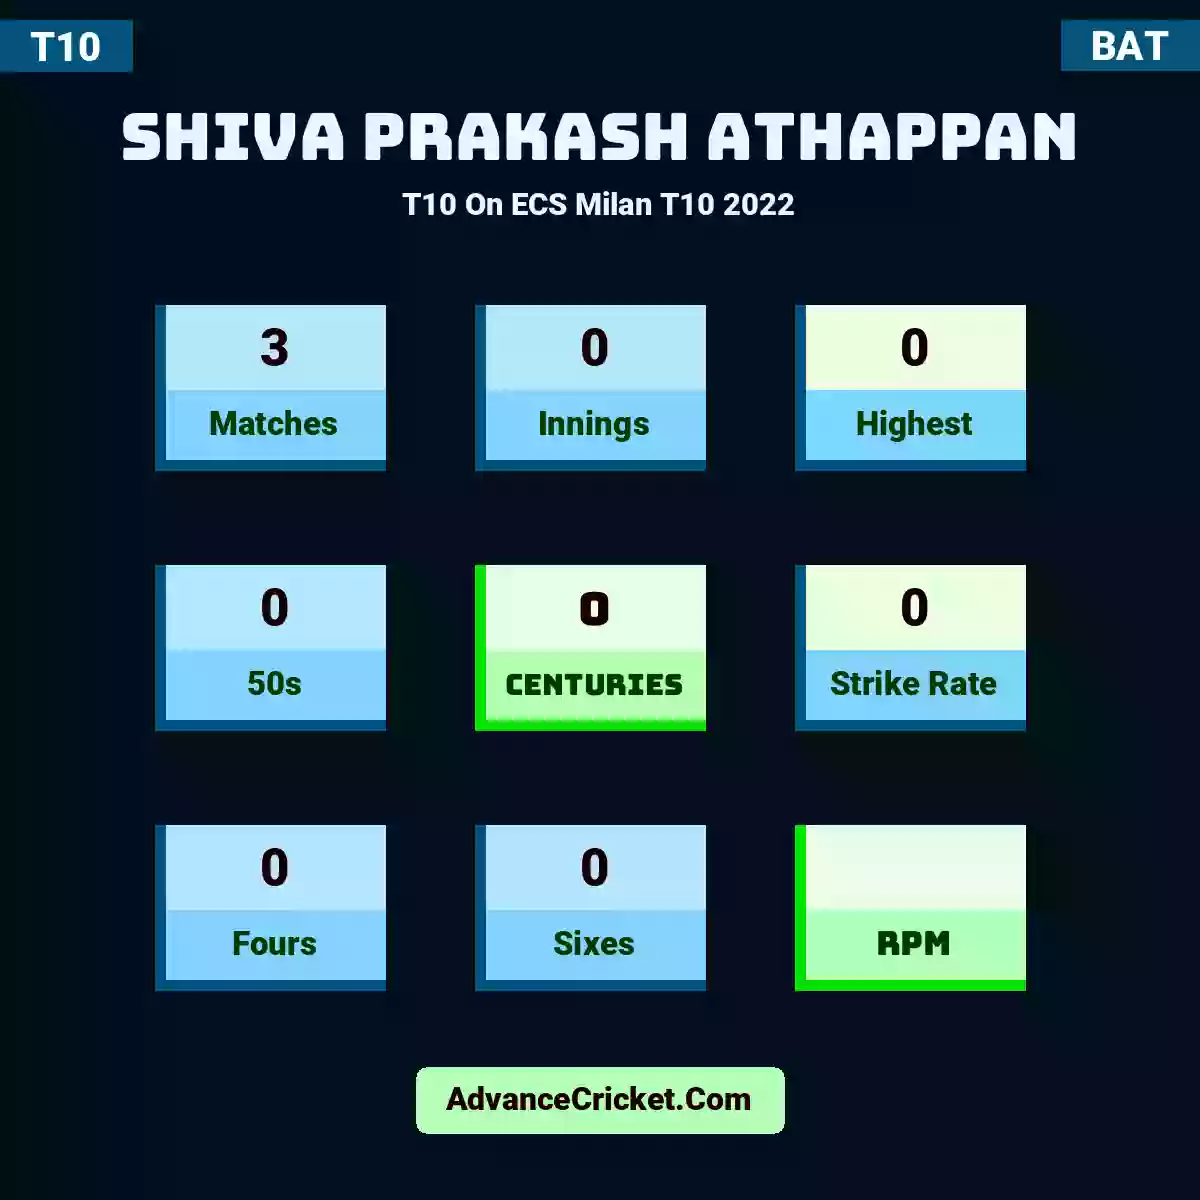 Shiva Prakash Athappan T10  On ECS Milan T10 2022, Shiva Prakash Athappan played 3 matches, scored 0 runs as highest, 0 half-centuries, and 0 centuries, with a strike rate of 0. S.Prakash.Athappan hit 0 fours and 0 sixes.